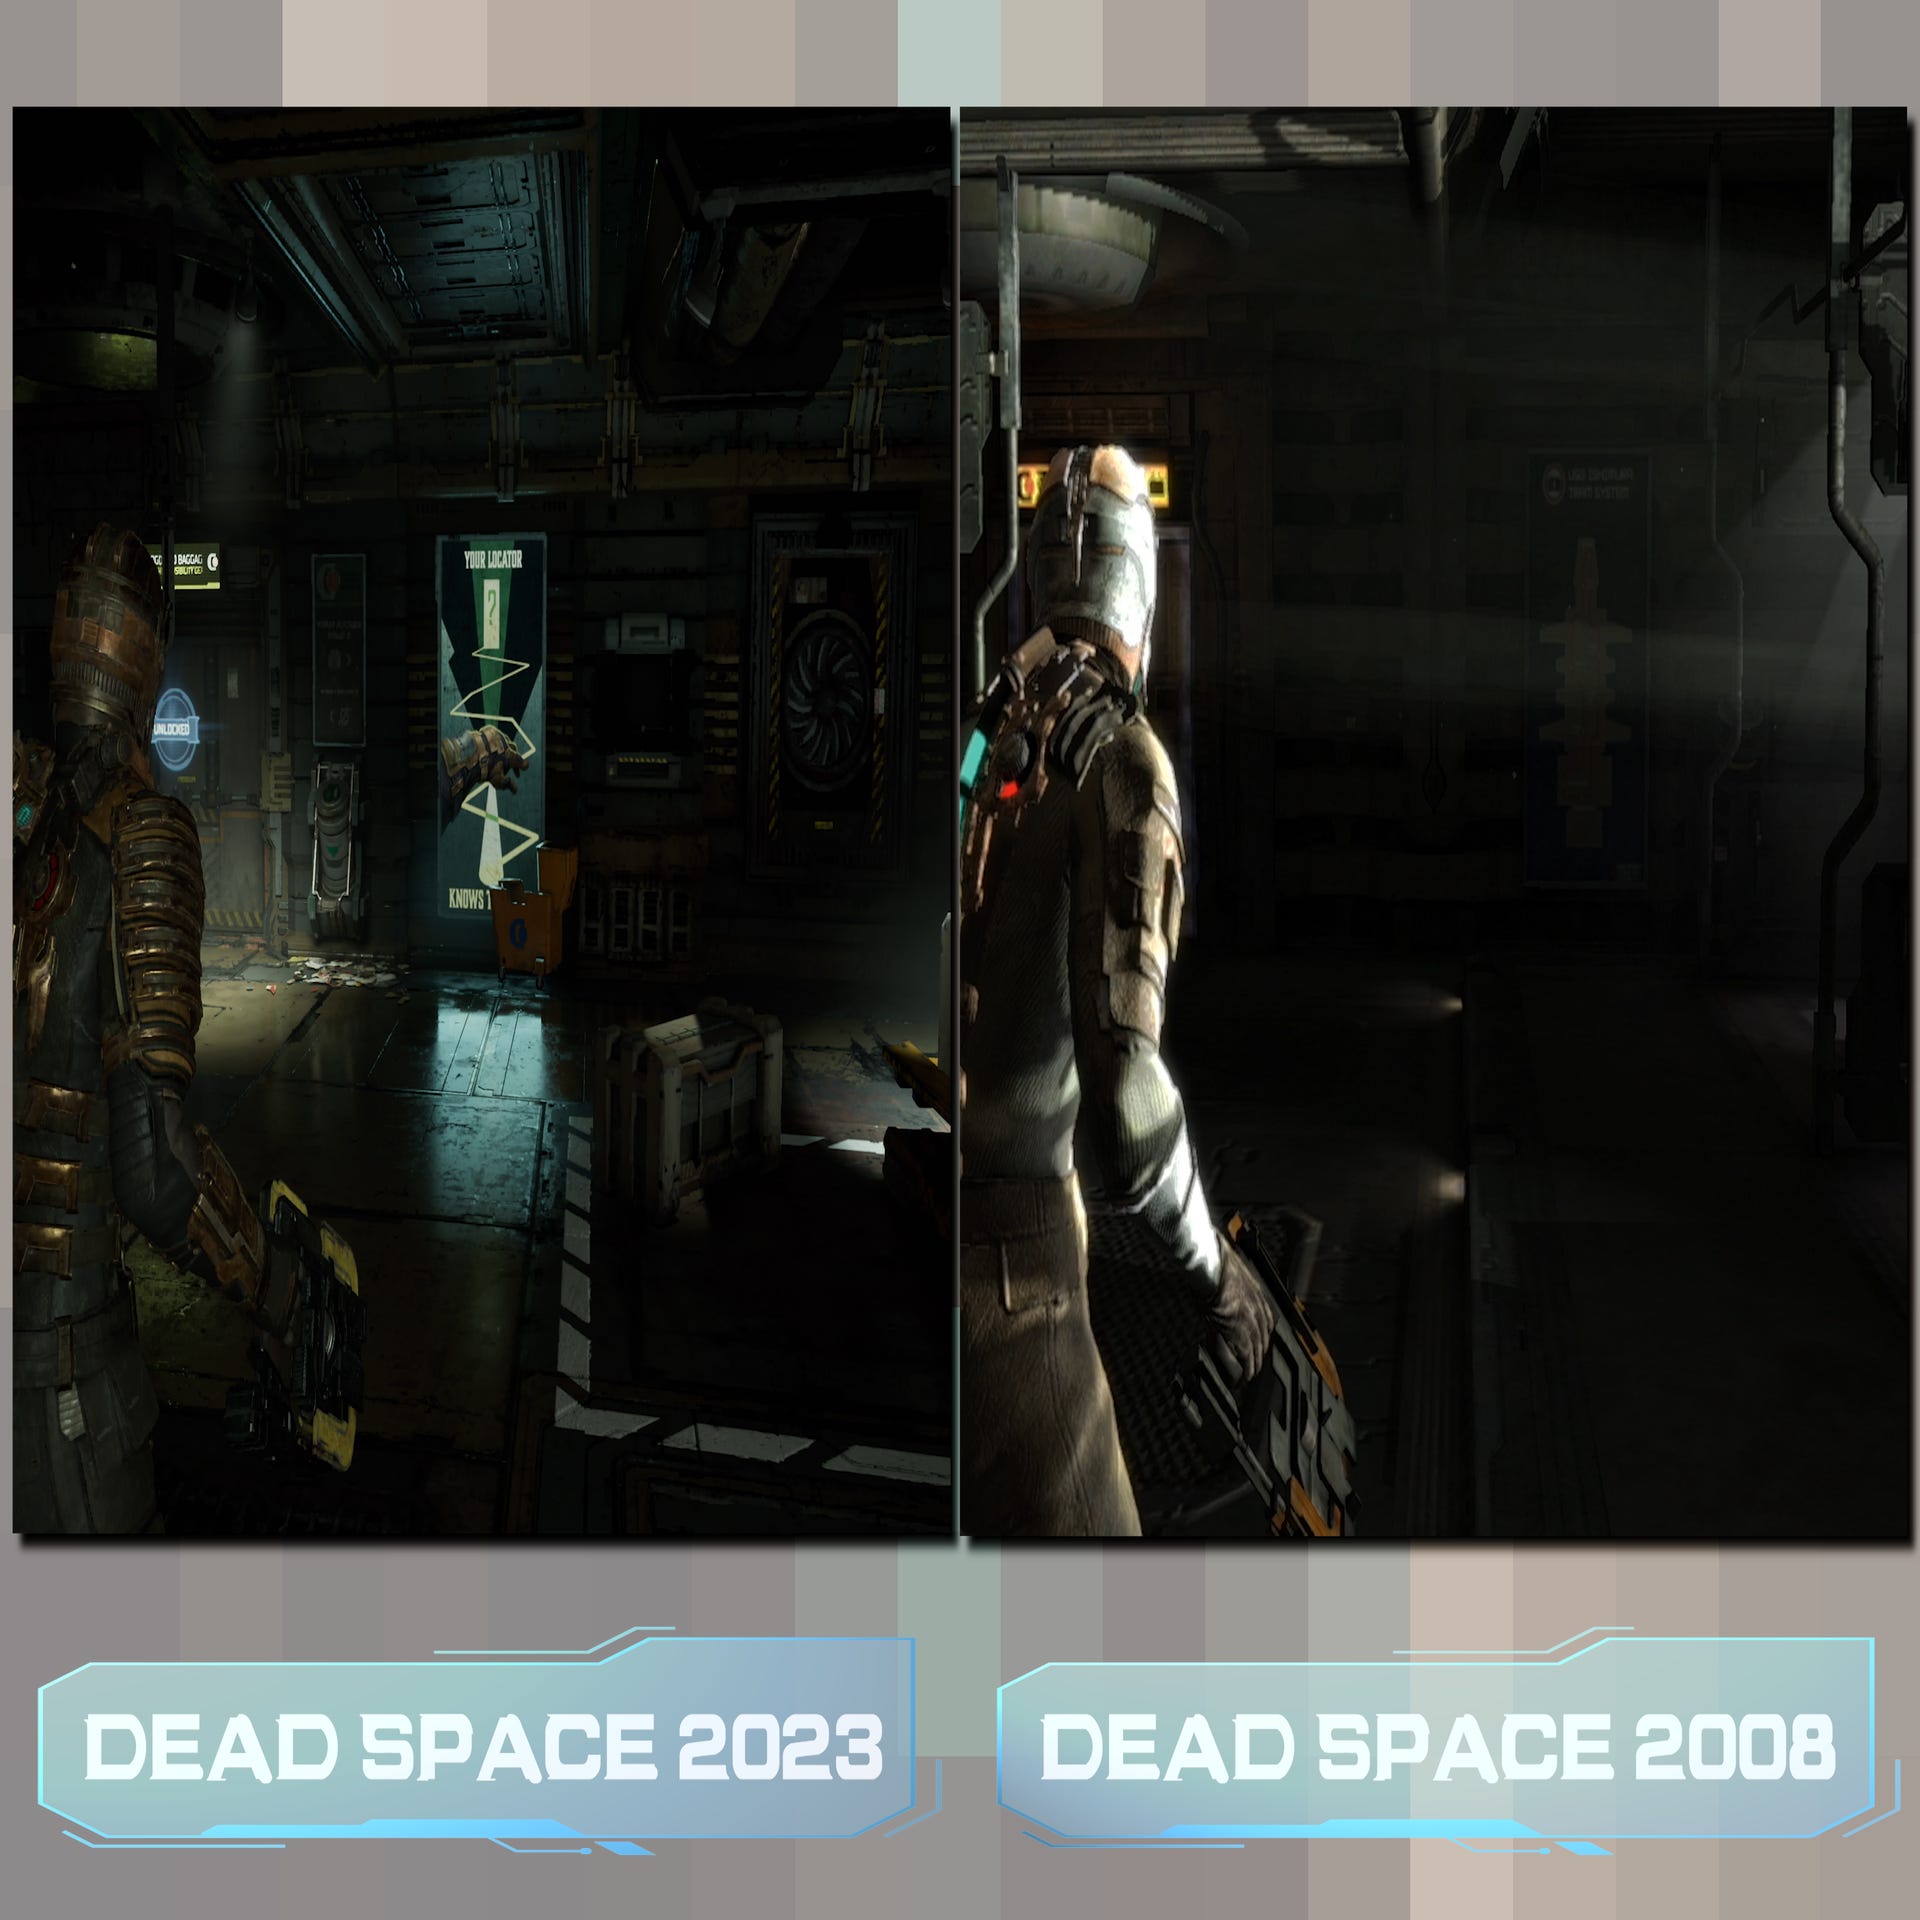 Dead Space 2 review